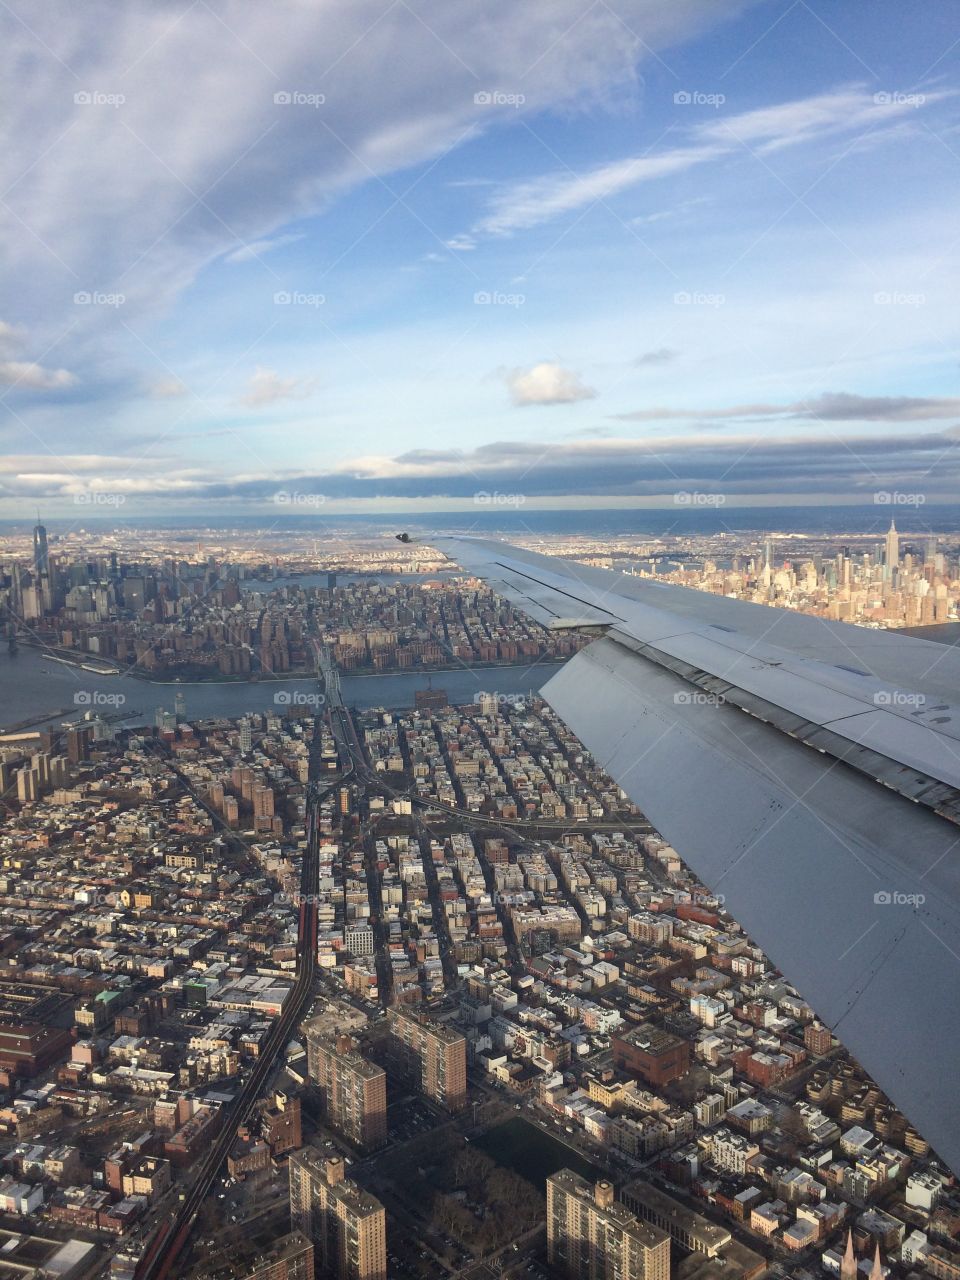 Flying over New York buildings 